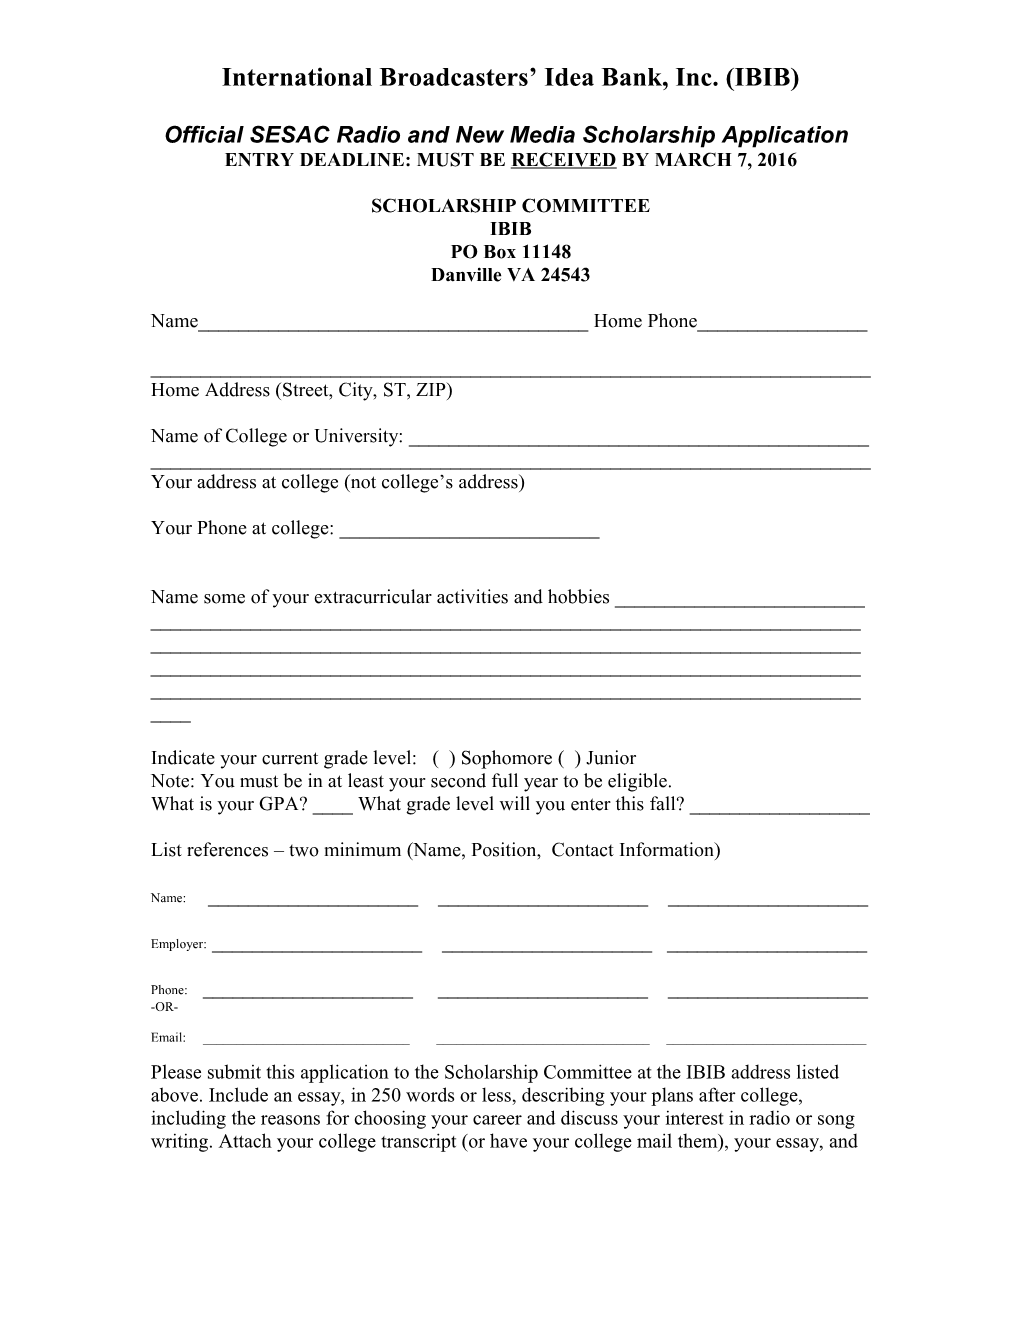 Official SESAC Radio Scholarship Application Form